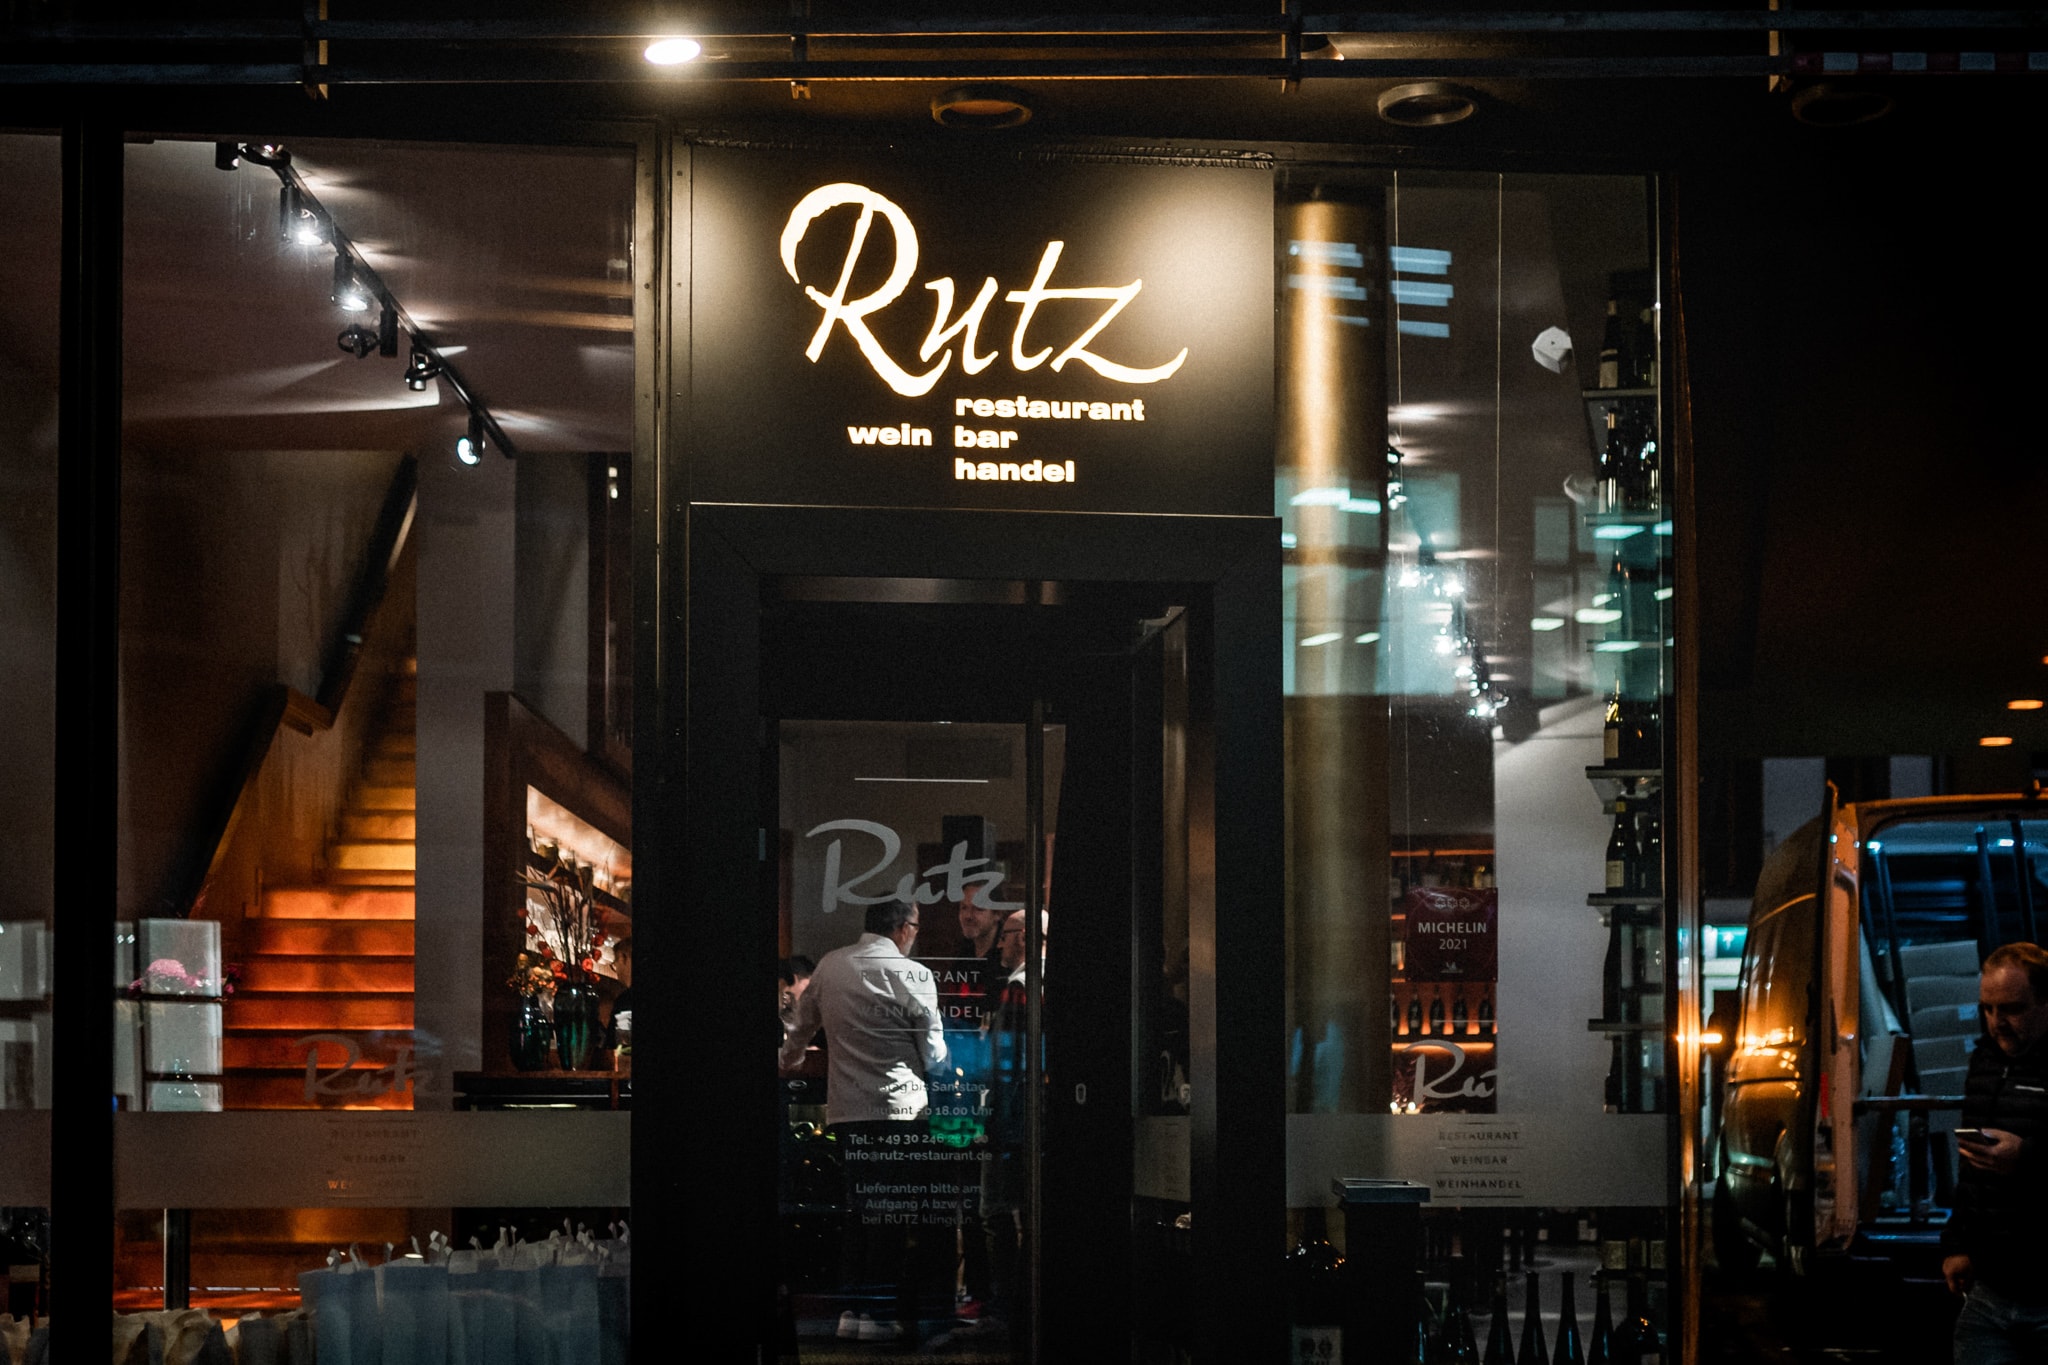 Rutz, Restaurant Rutz Berlin, kochen auf hohen Niveau, Straßenbild